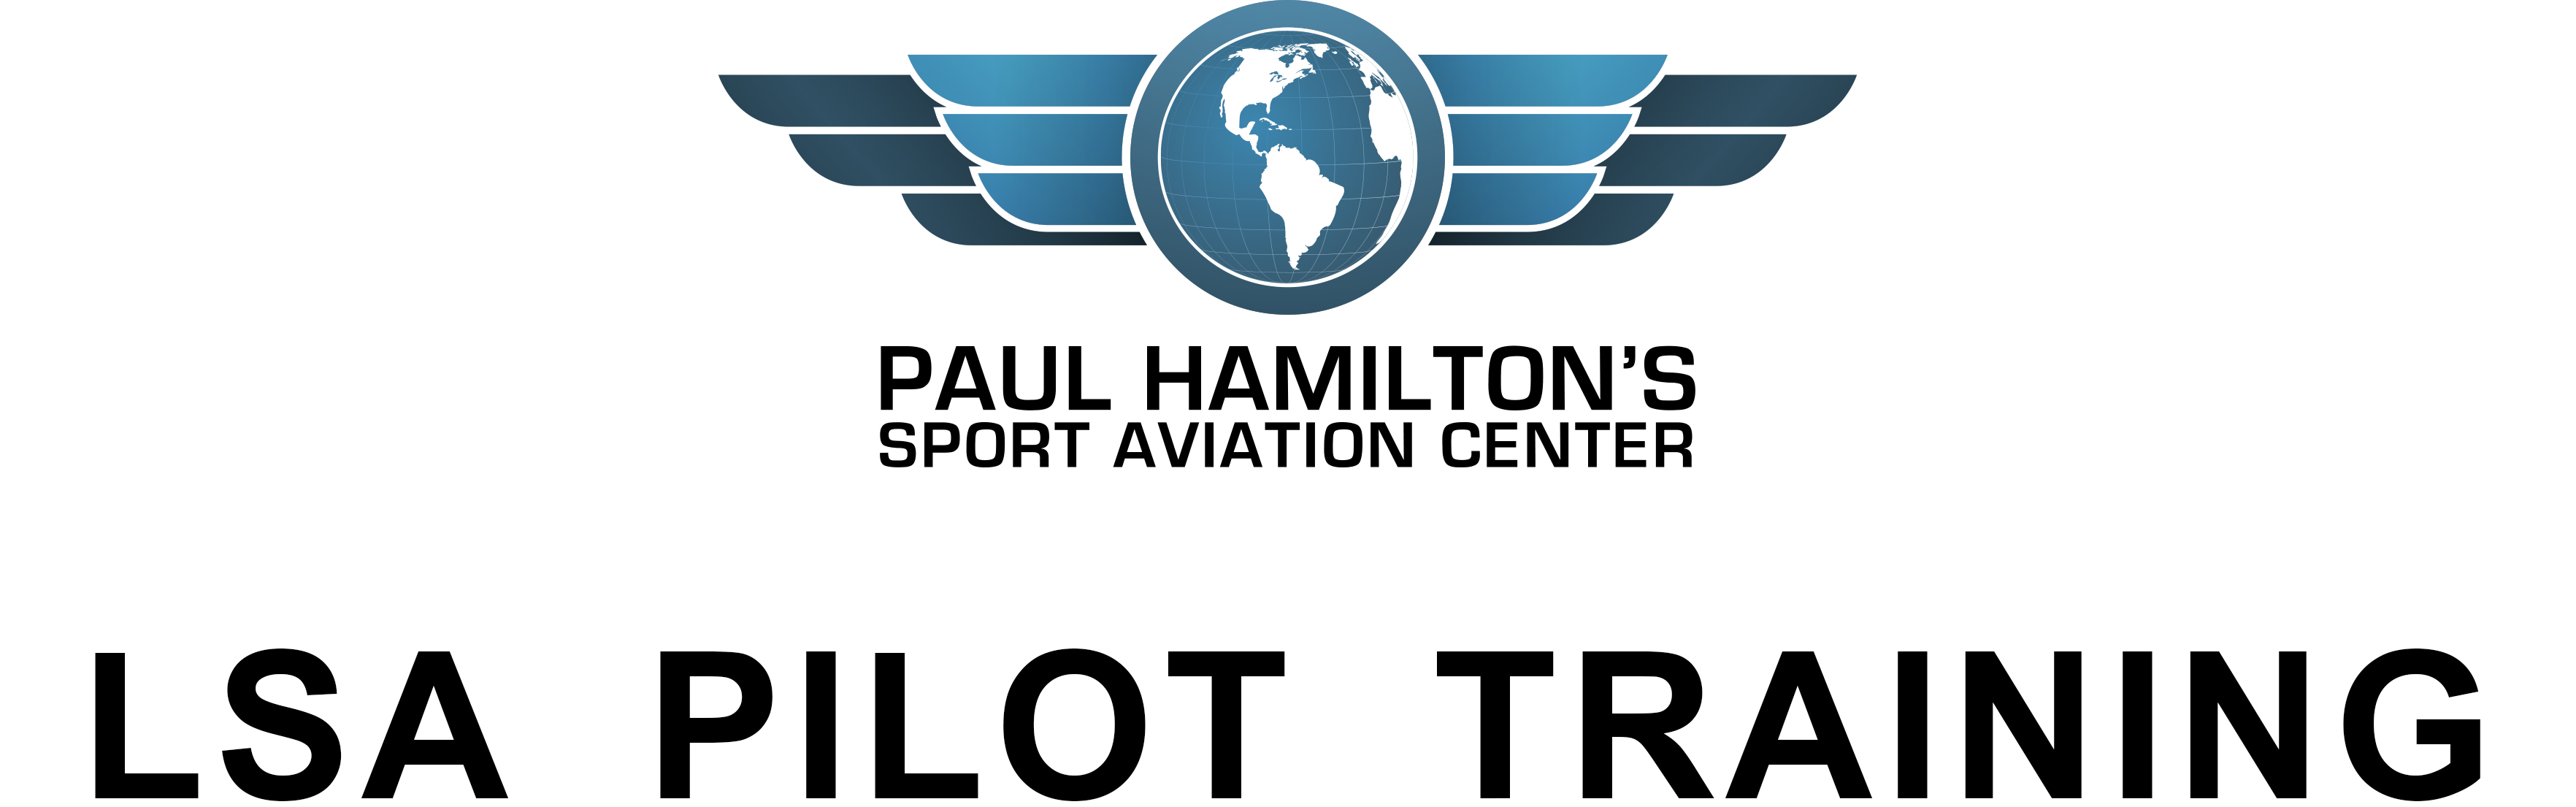 LSA Pilot Training | Paul Hamilton's Sport Aviation Center LLC